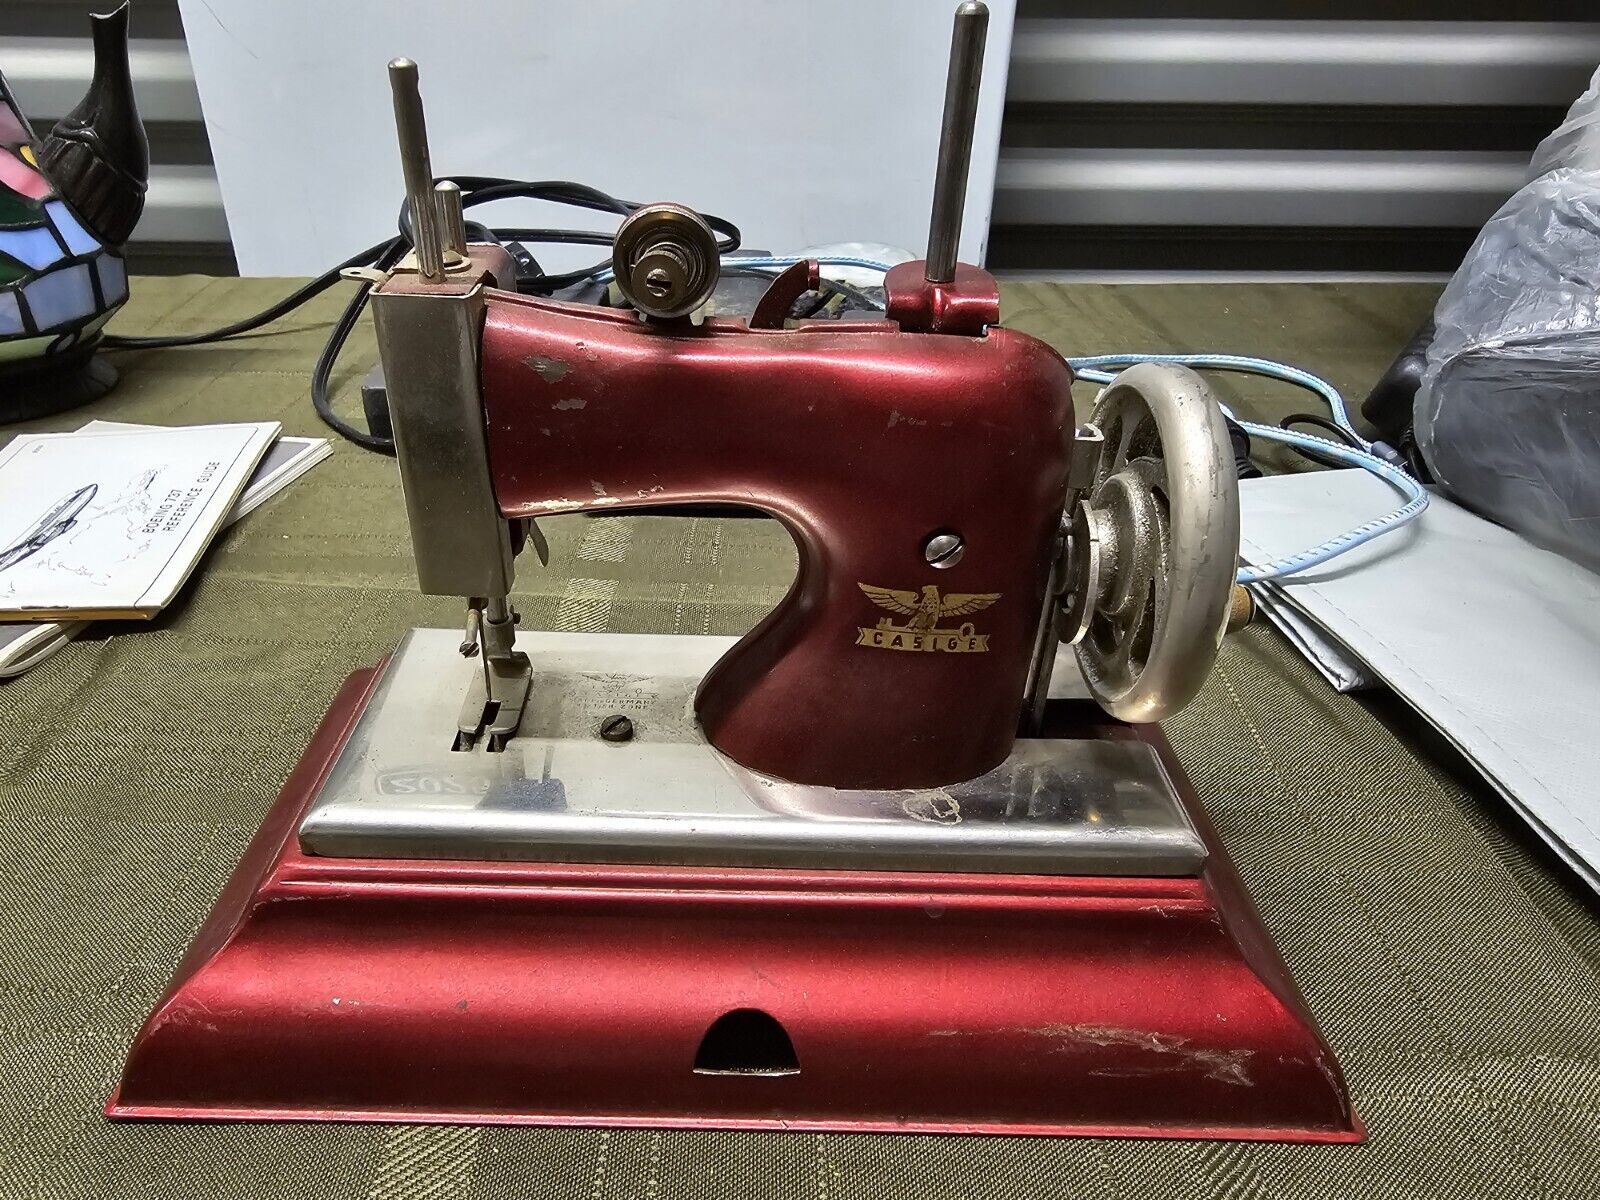 VINTAGE 1940’s “Casige” Mini Sewing Machine, Germany